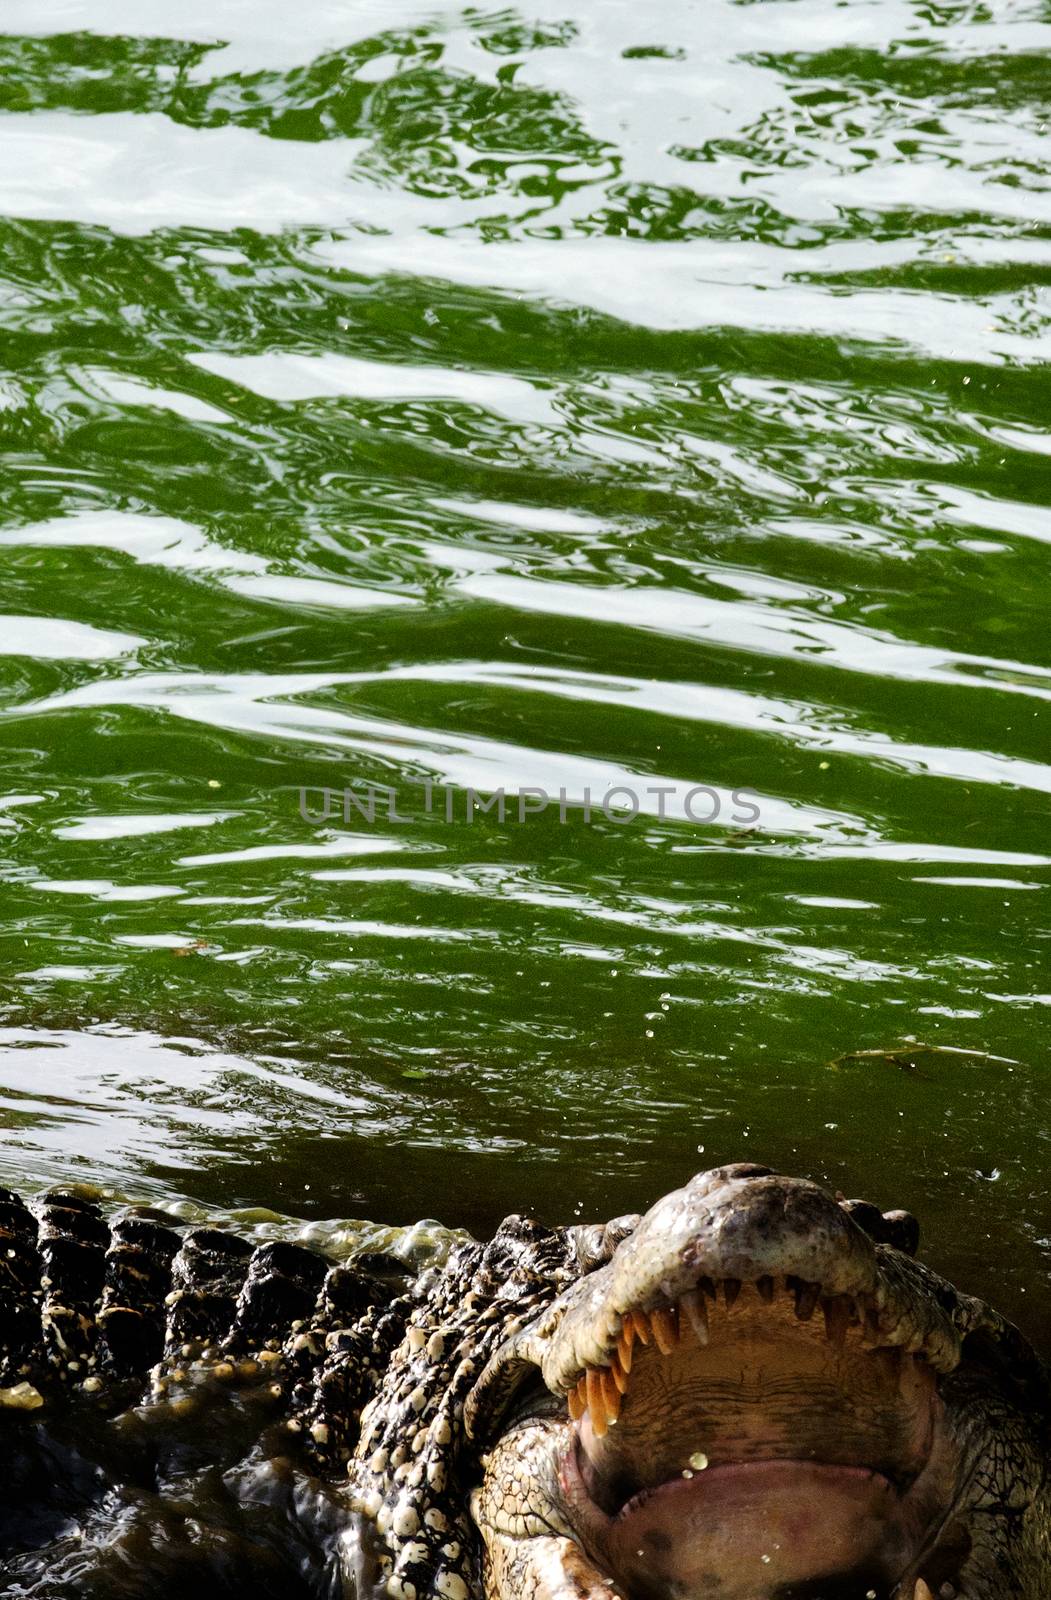  Cuban crocodile (Crocodylus rhombifer) with open Mouth in the water